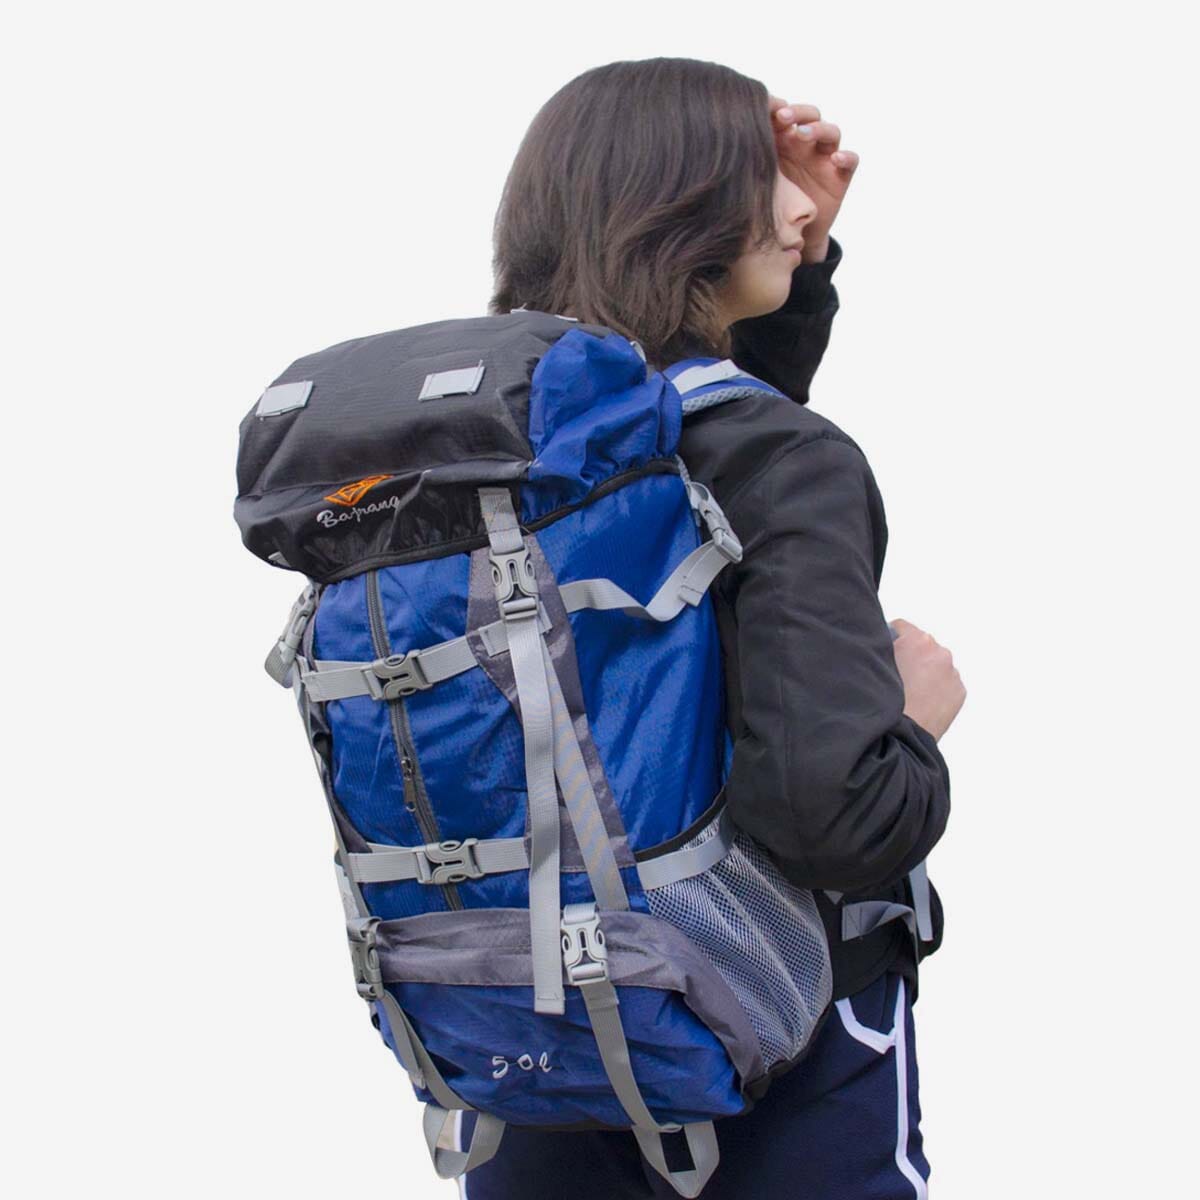 Buy PEAK Adventure Series traveling bag Rucksacks, Haversacks, Trekking And  Hiking Travel Bags (Red, Black) (42Ltr) at Amazon.in